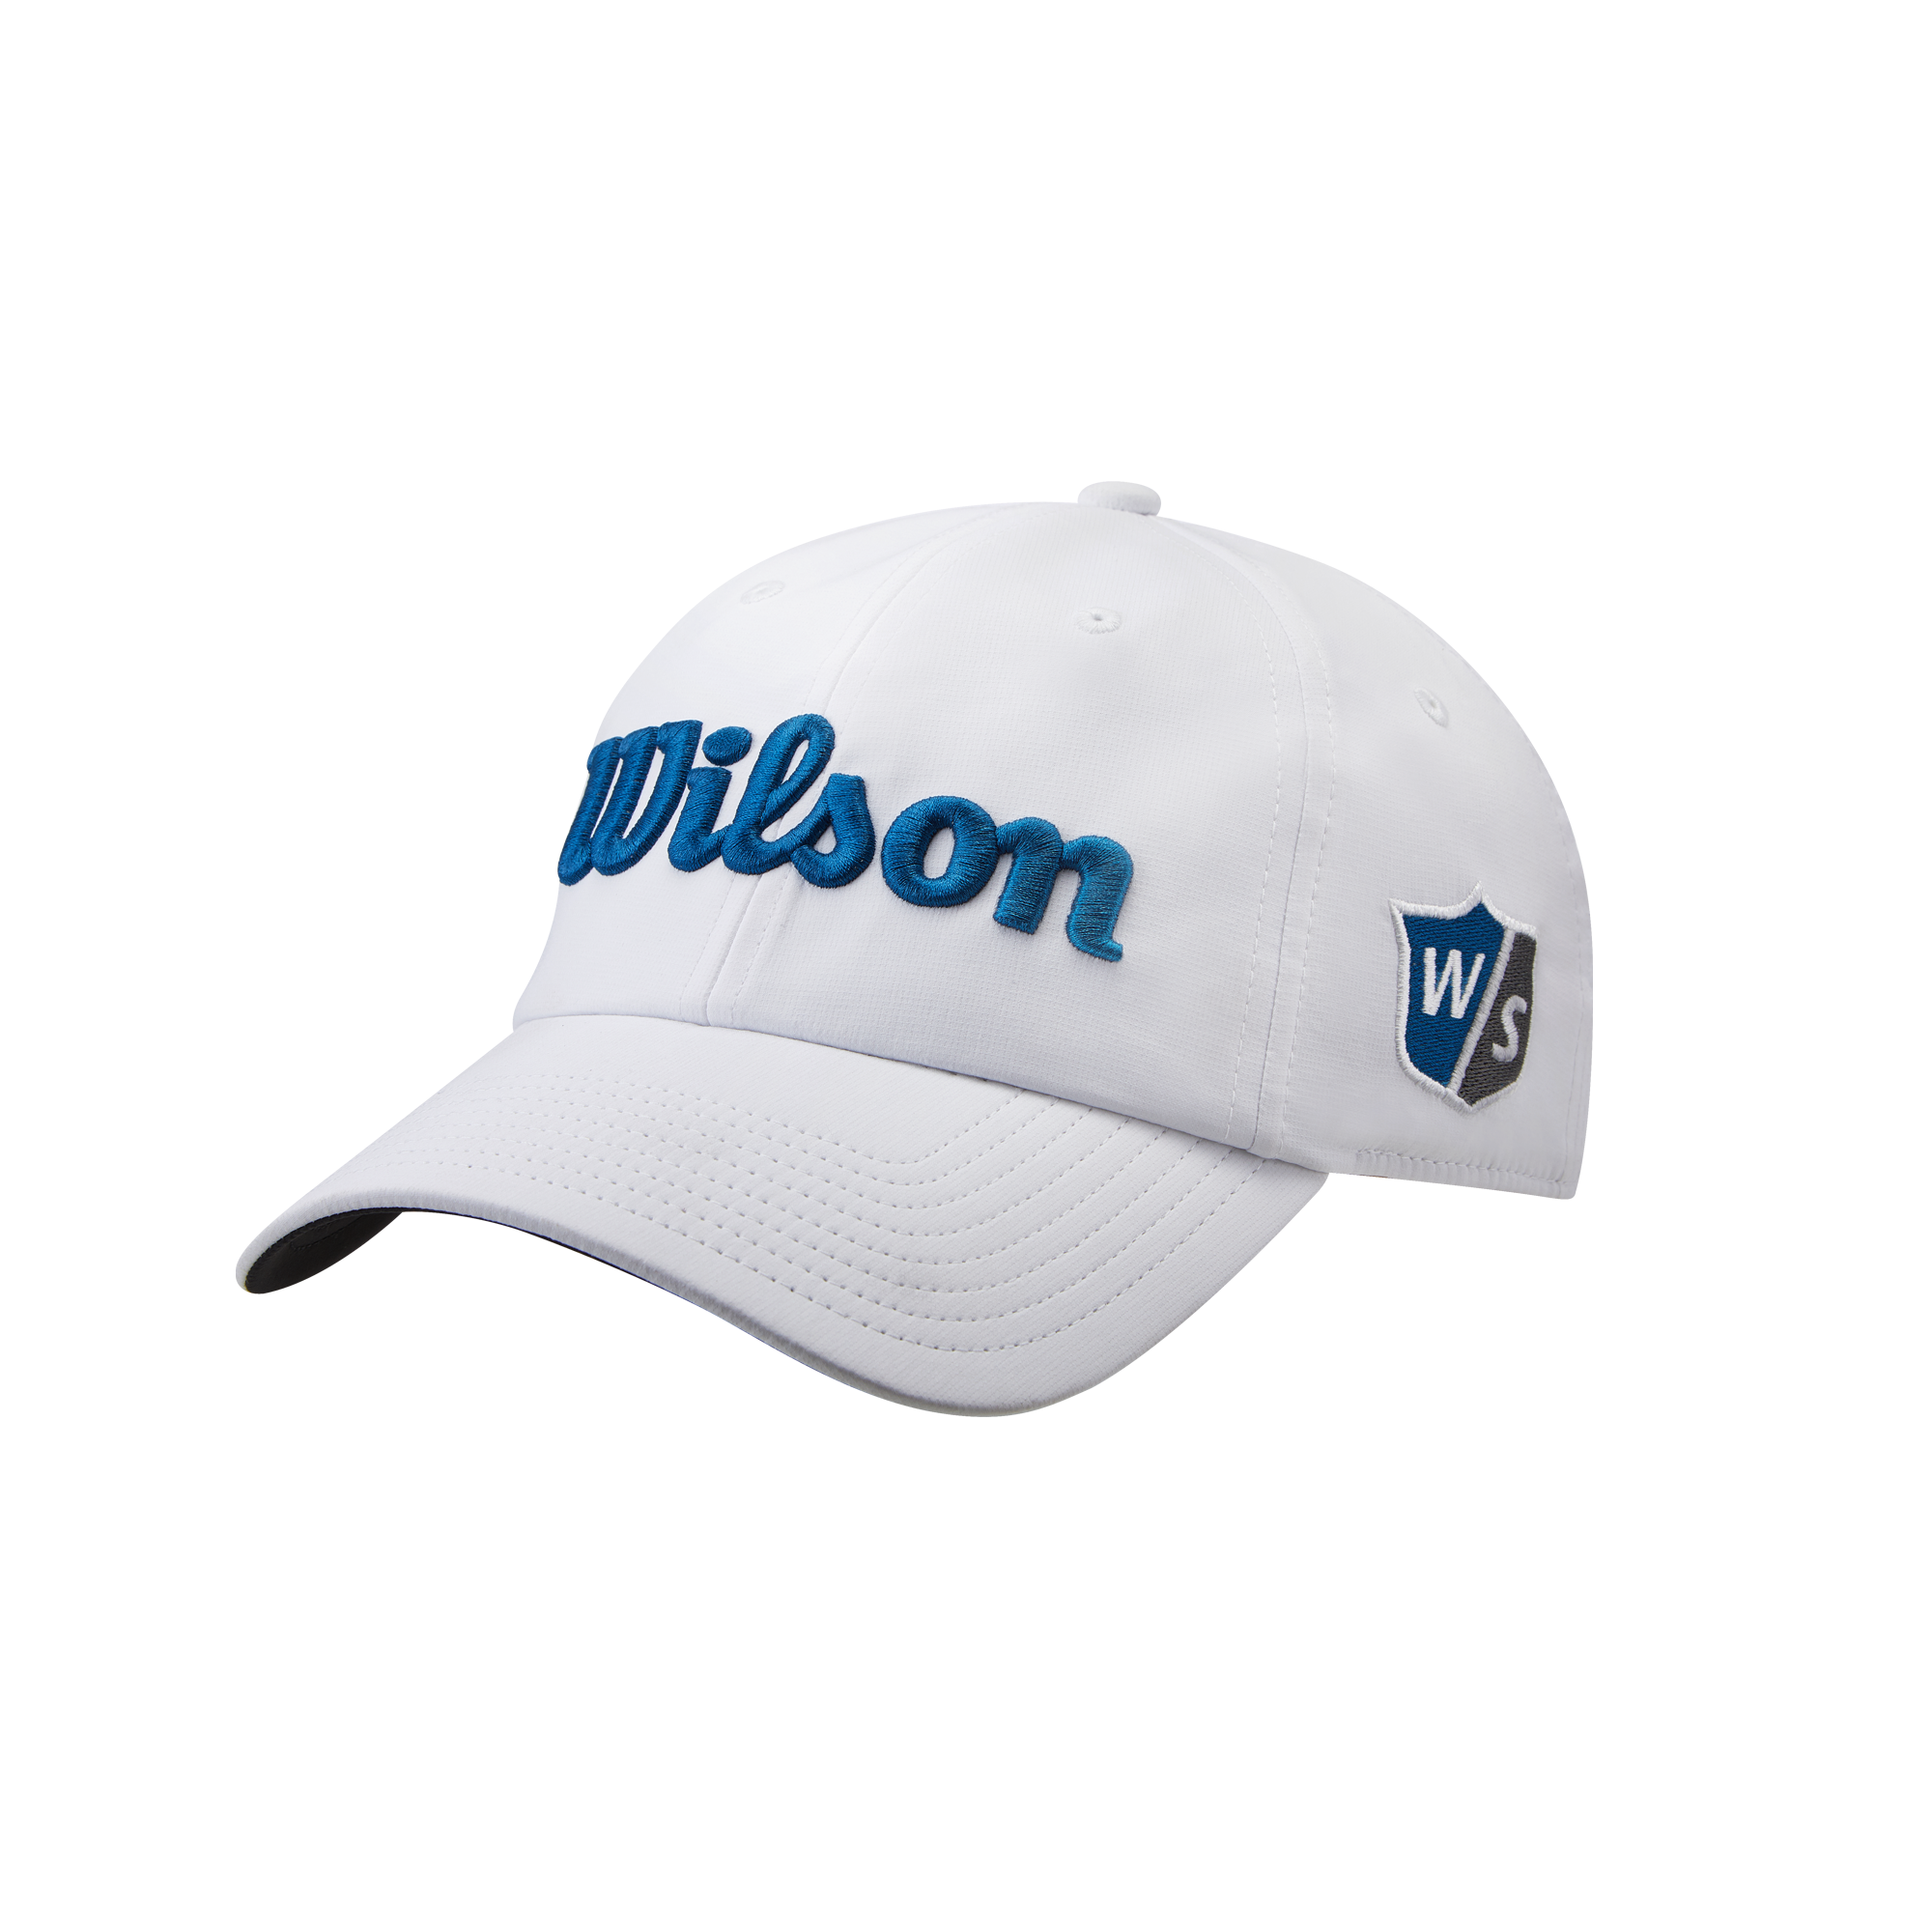 #3 - Wilson - Pro Tour Hat - White & Navy Blue